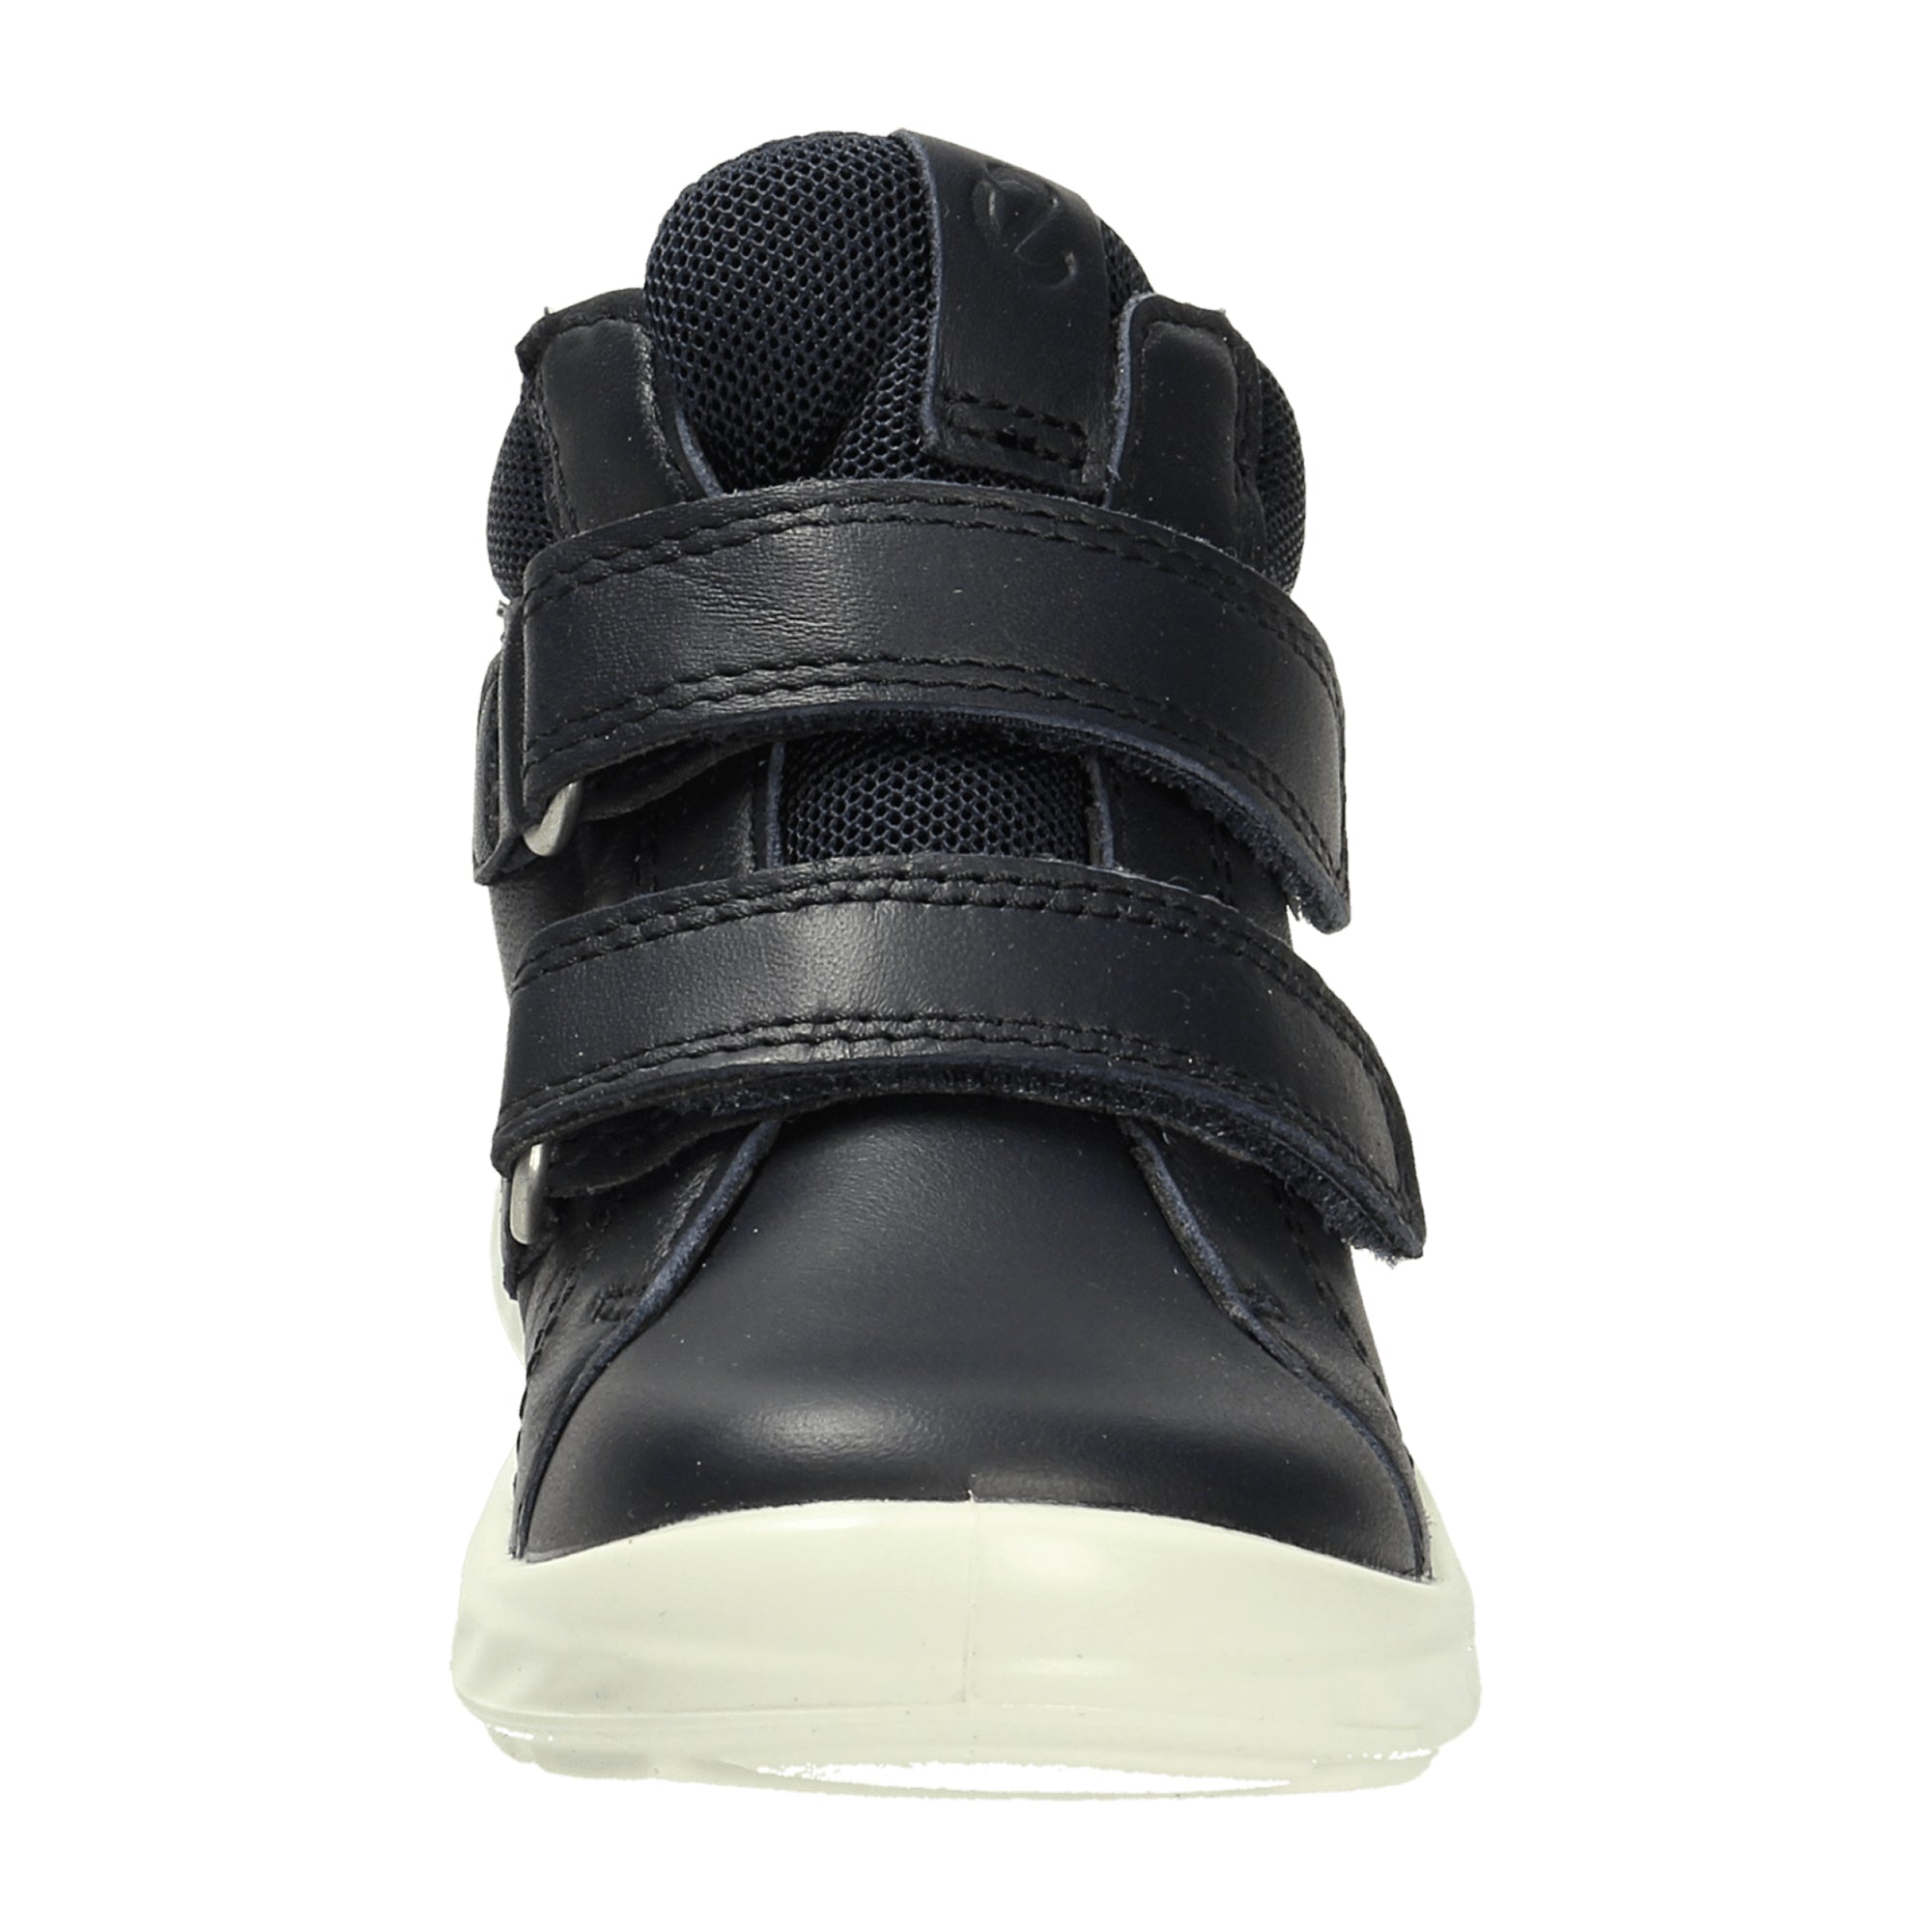 Ecco SP.1 Lite Kids Sneaker in Black - Durable and Stylish Children’s Footwear